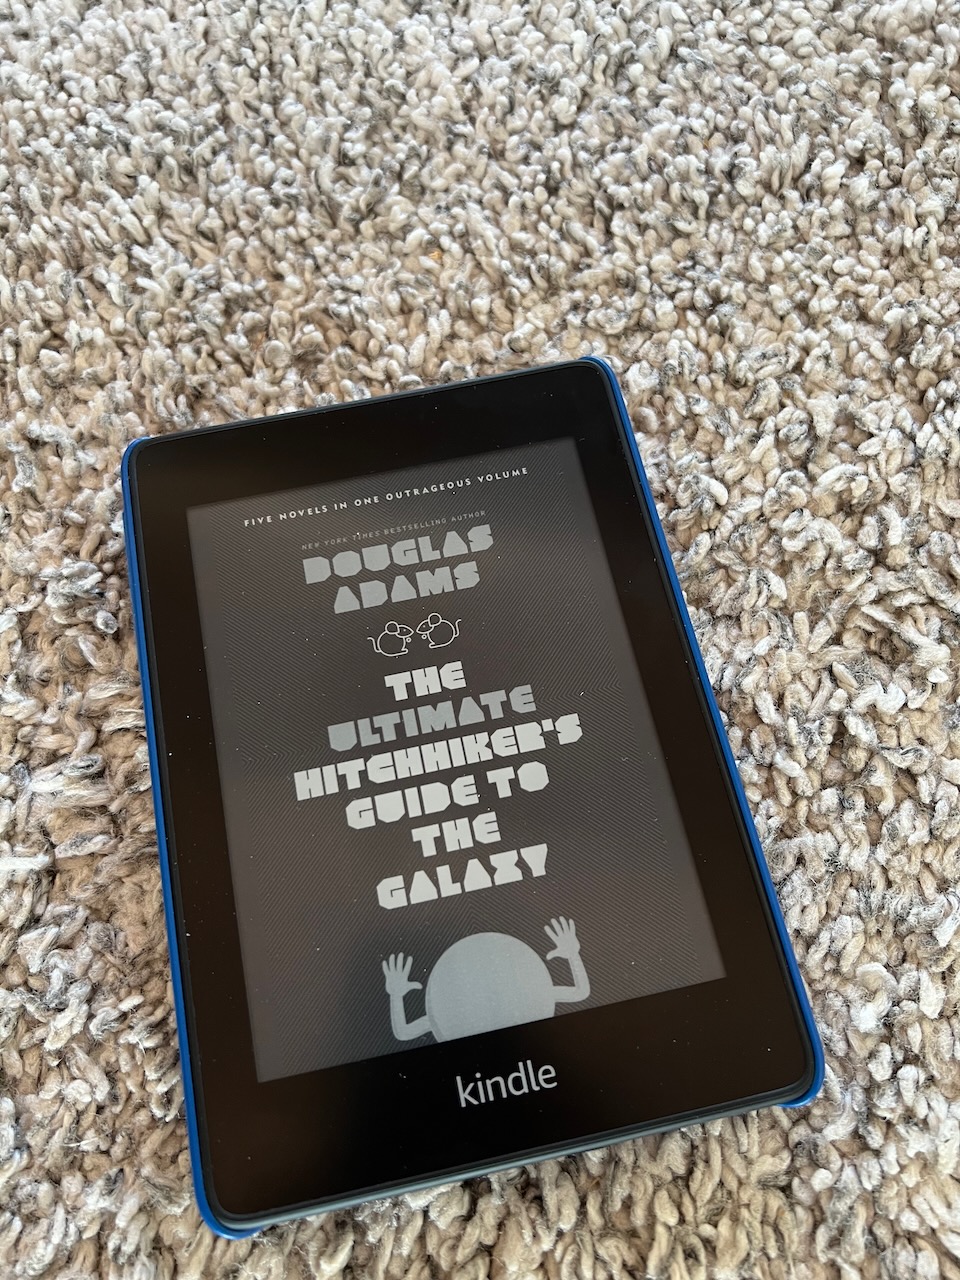 Foto van de Kindle met de digital cover van The Ultimate Hitchhiker's Guide to the Galaxy